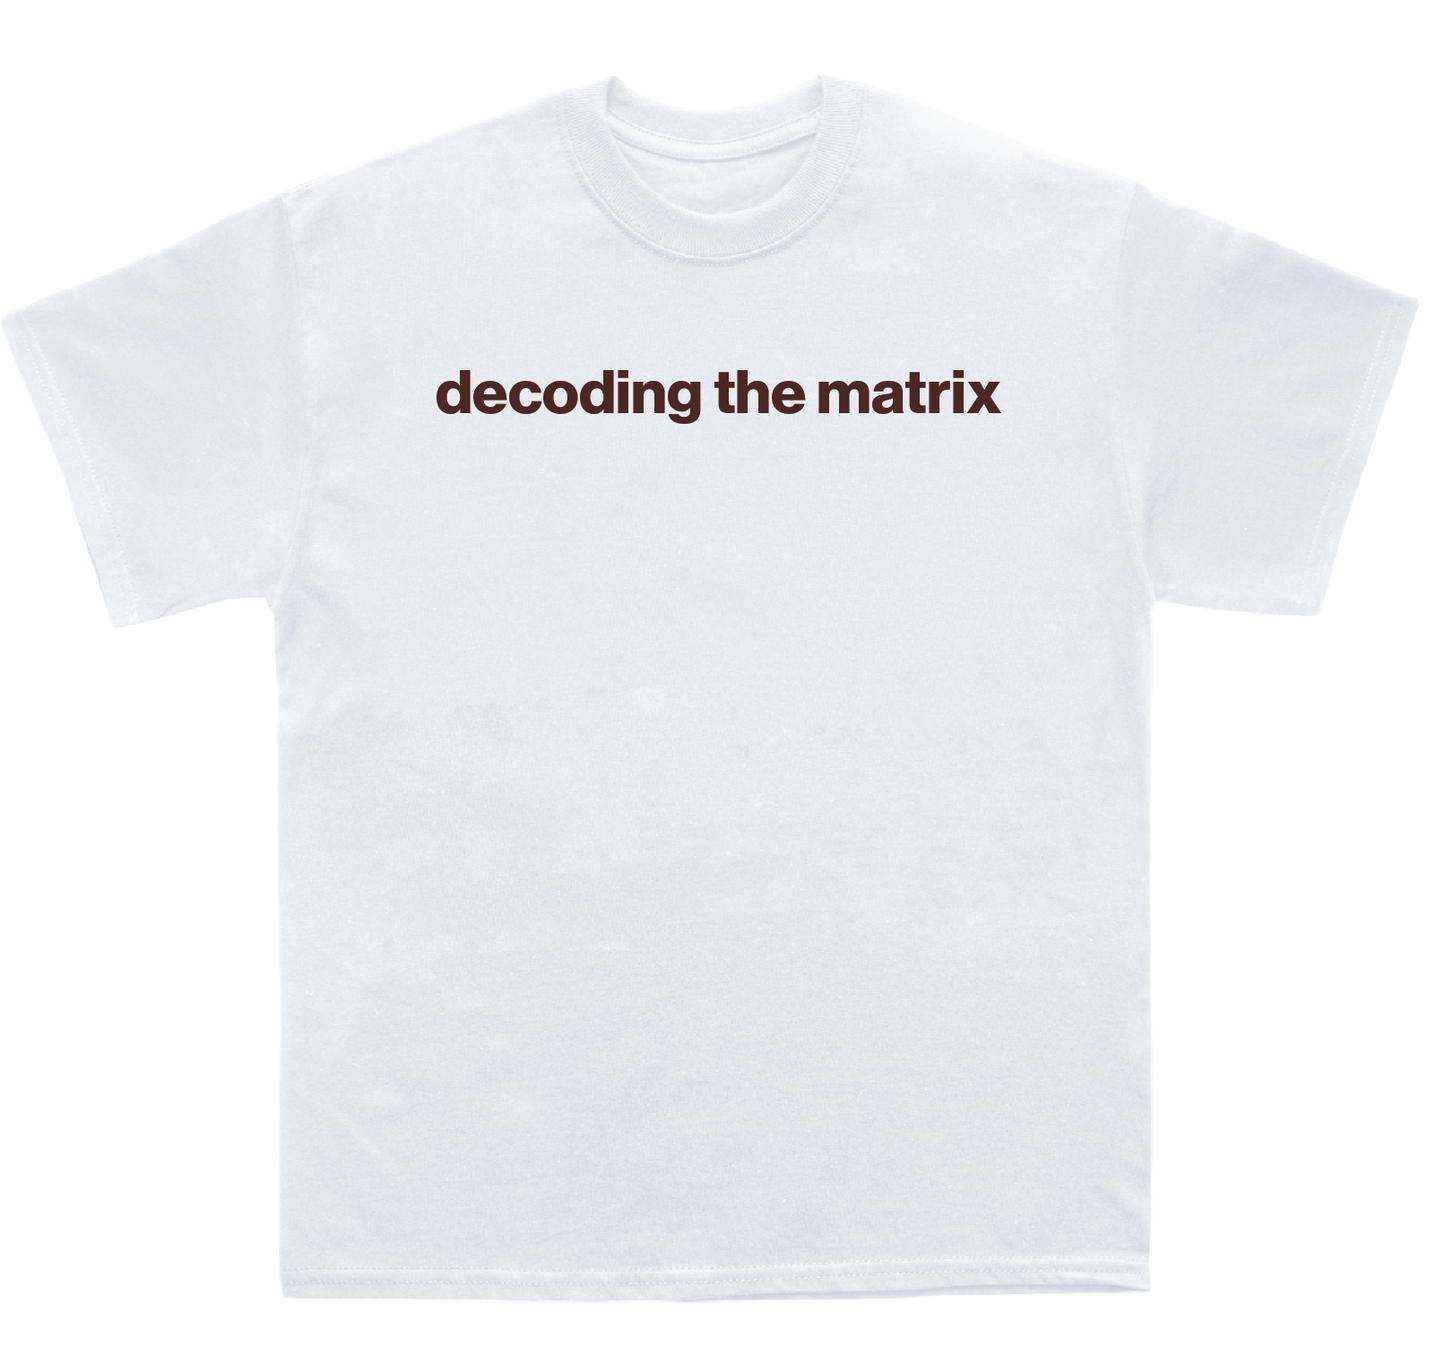 decoding the matrix shirt